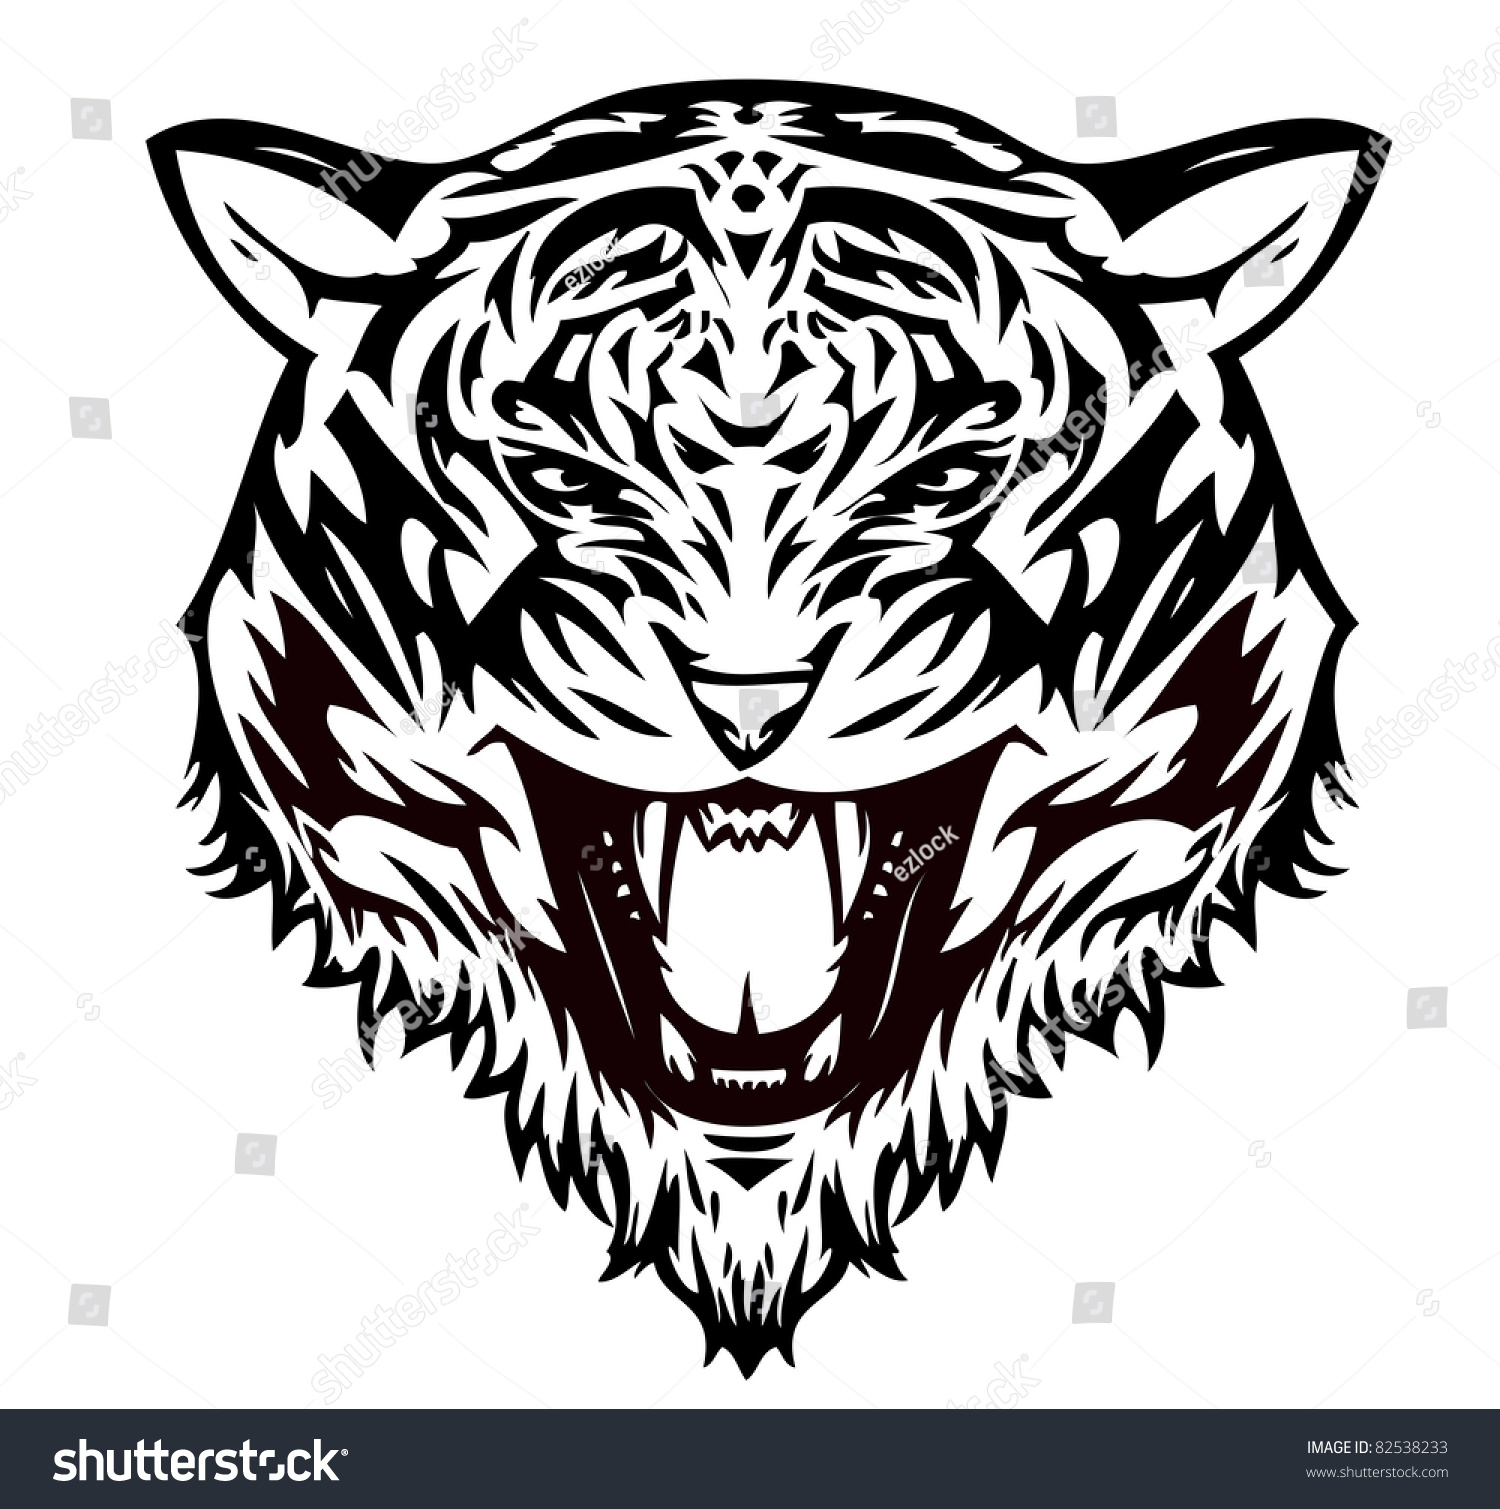 Tiger Aggressive (Vector) - 82538233 : Shutterstock